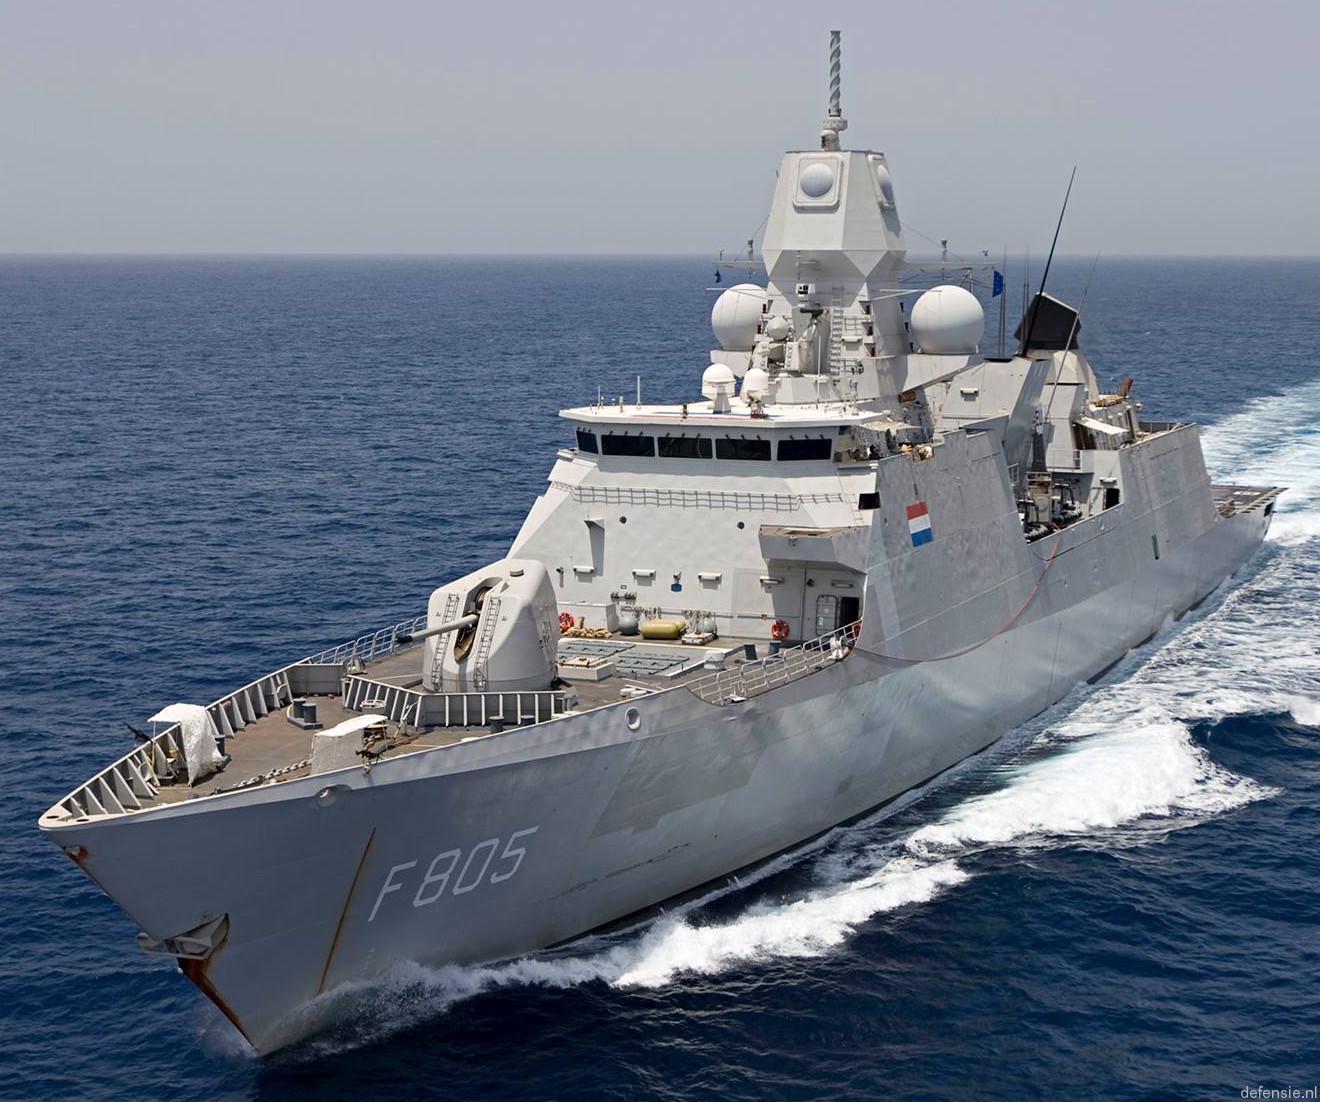 f-805 hnlms evertsen guided missile frigate ffg lcf royal netherlands navy 15